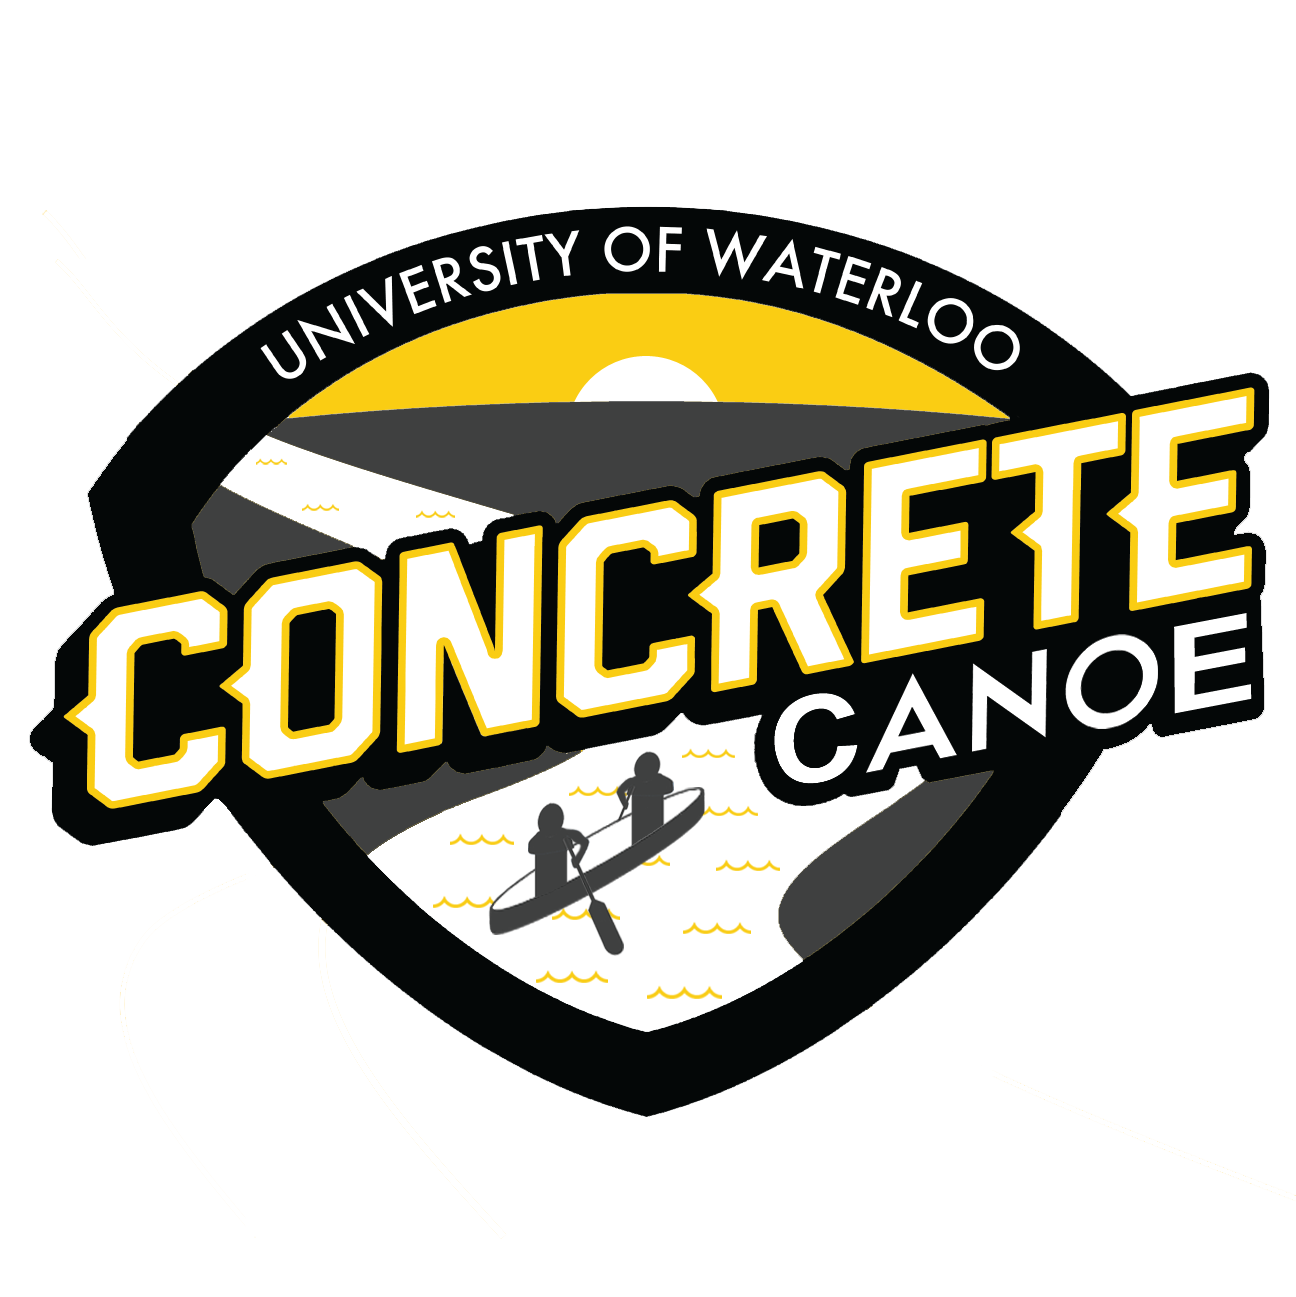 Concrete canoe logo